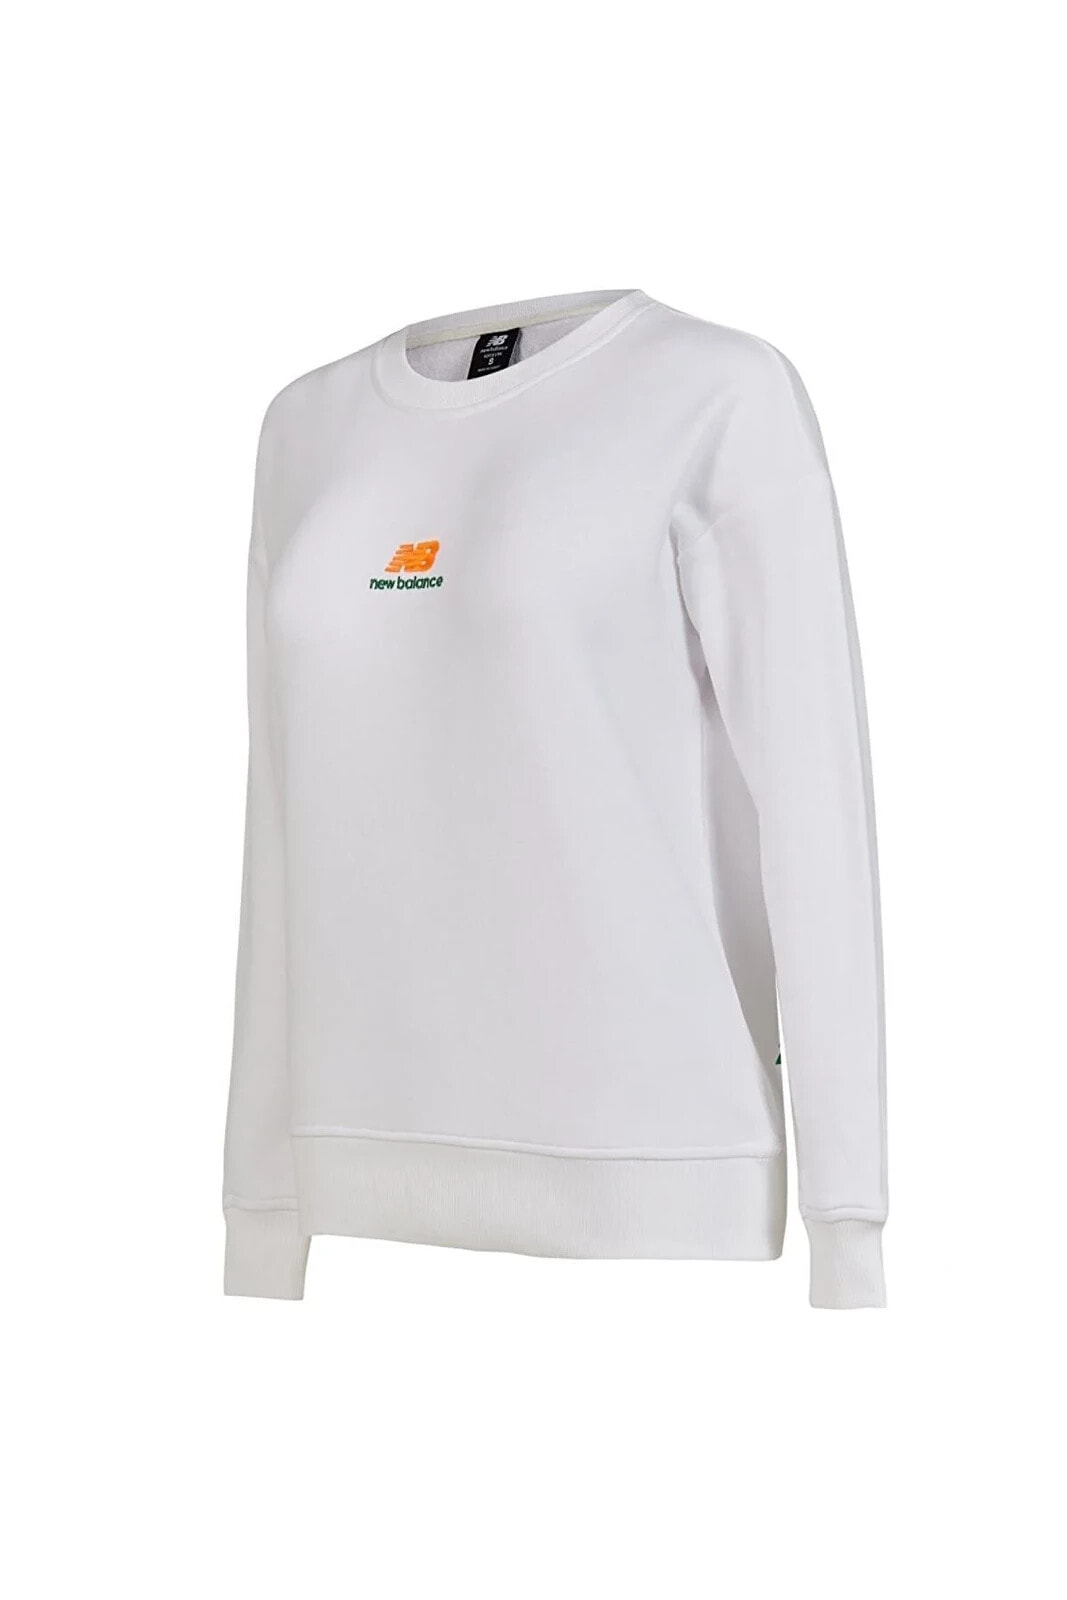 Wnh1308 Woman Lifestyle Sweat Beyaz Kadın Sweatshirt